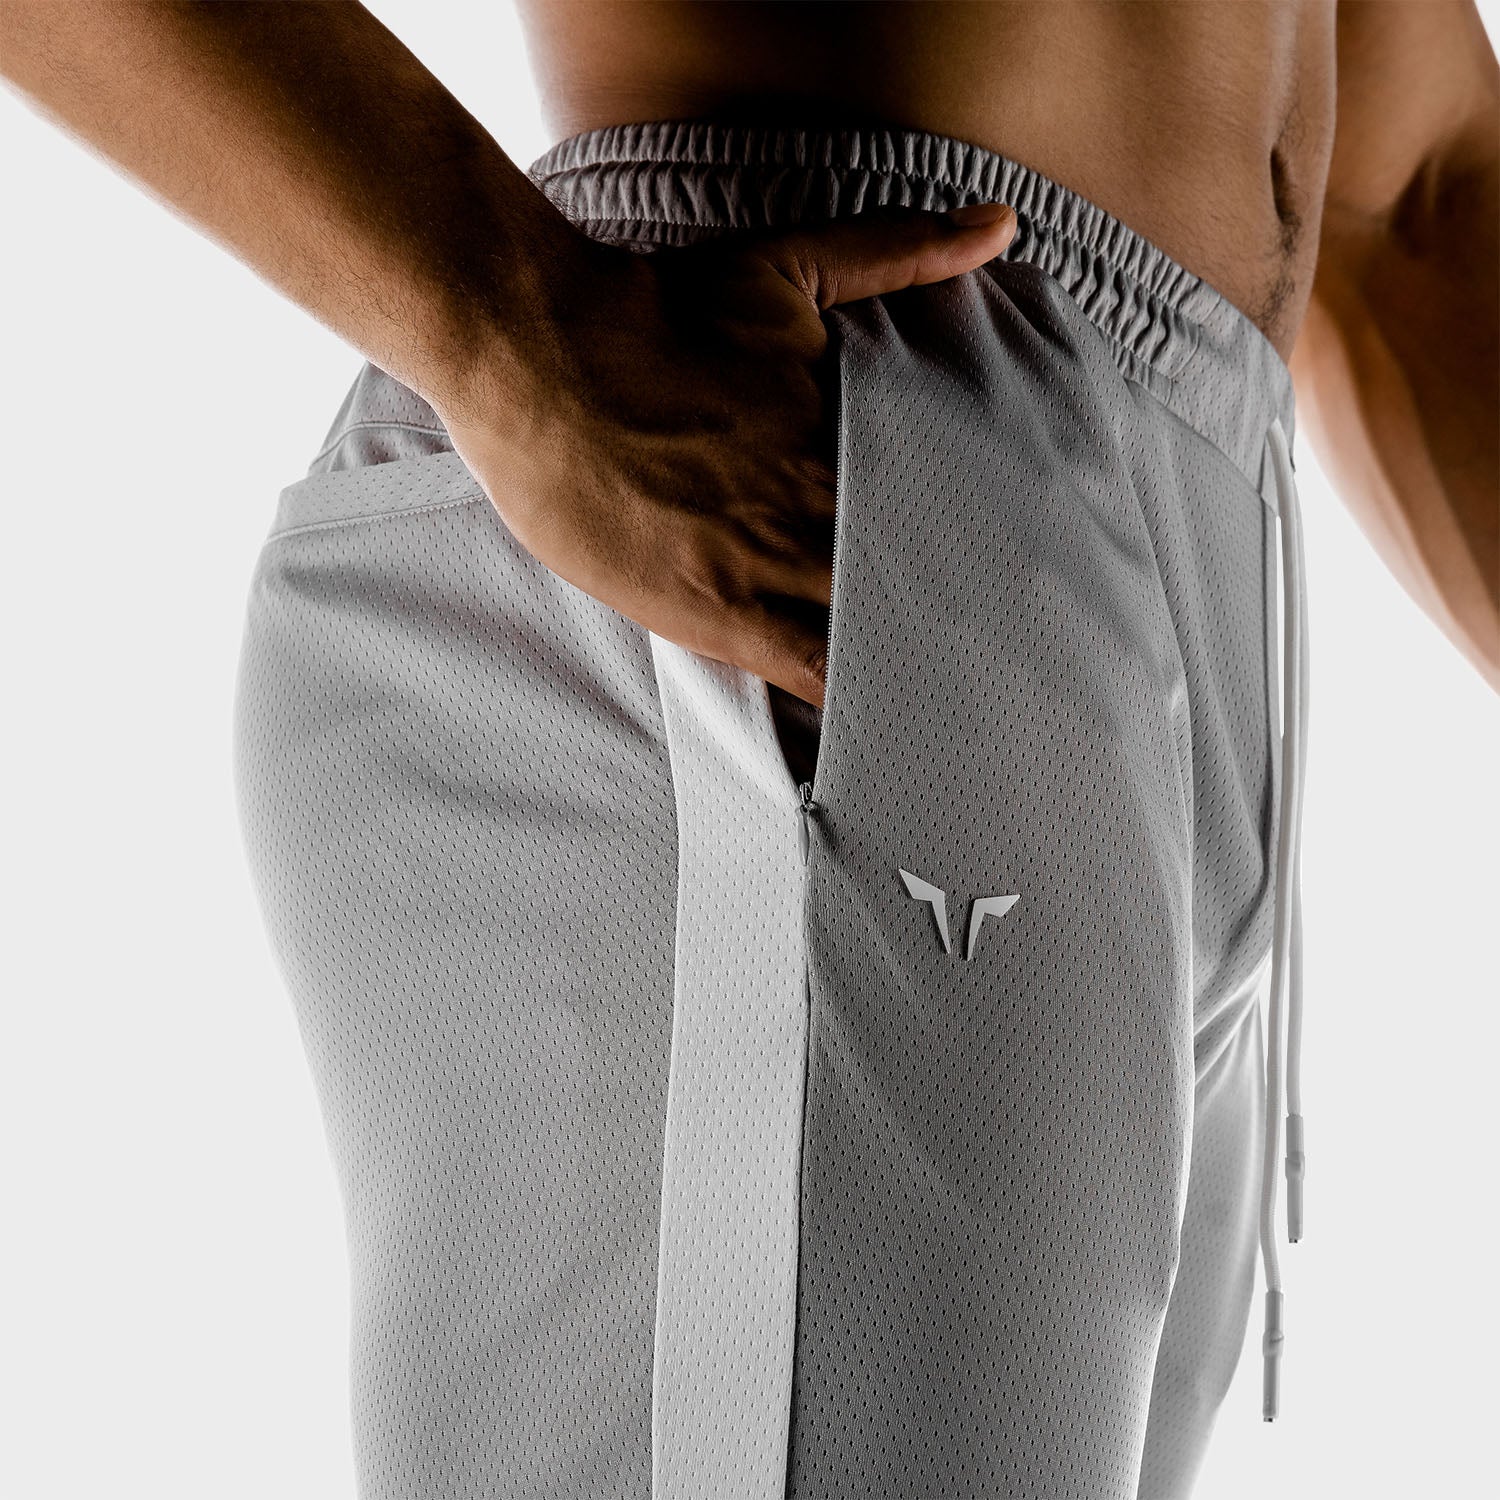 squatwolf-gym-wear-hybrid-2-0-track-pants-grey-workout-pants-for-men